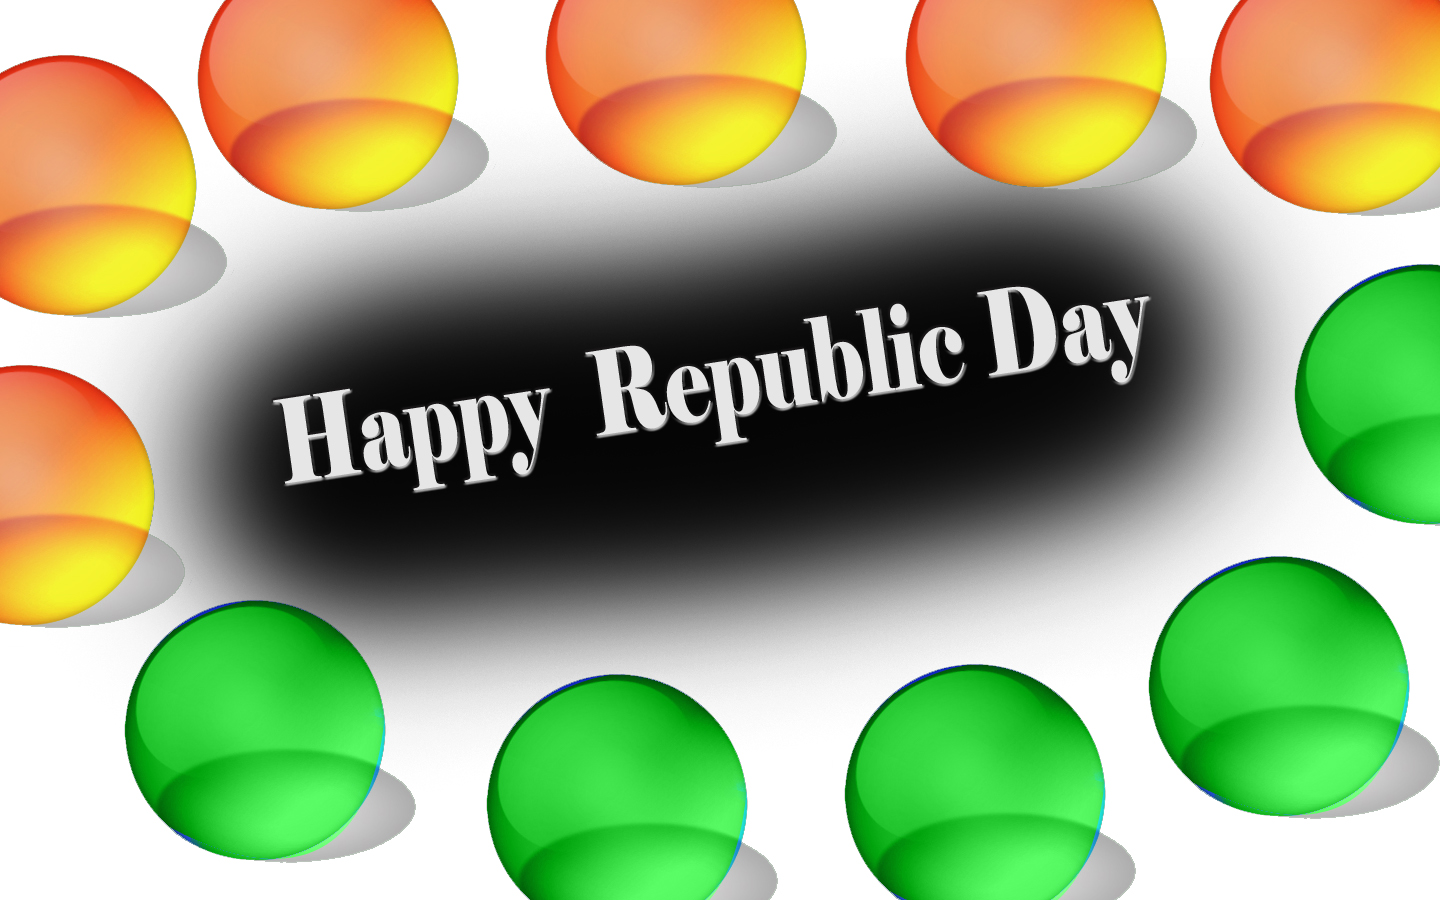 Have A Happy Republic Day Wallpaper Jpg